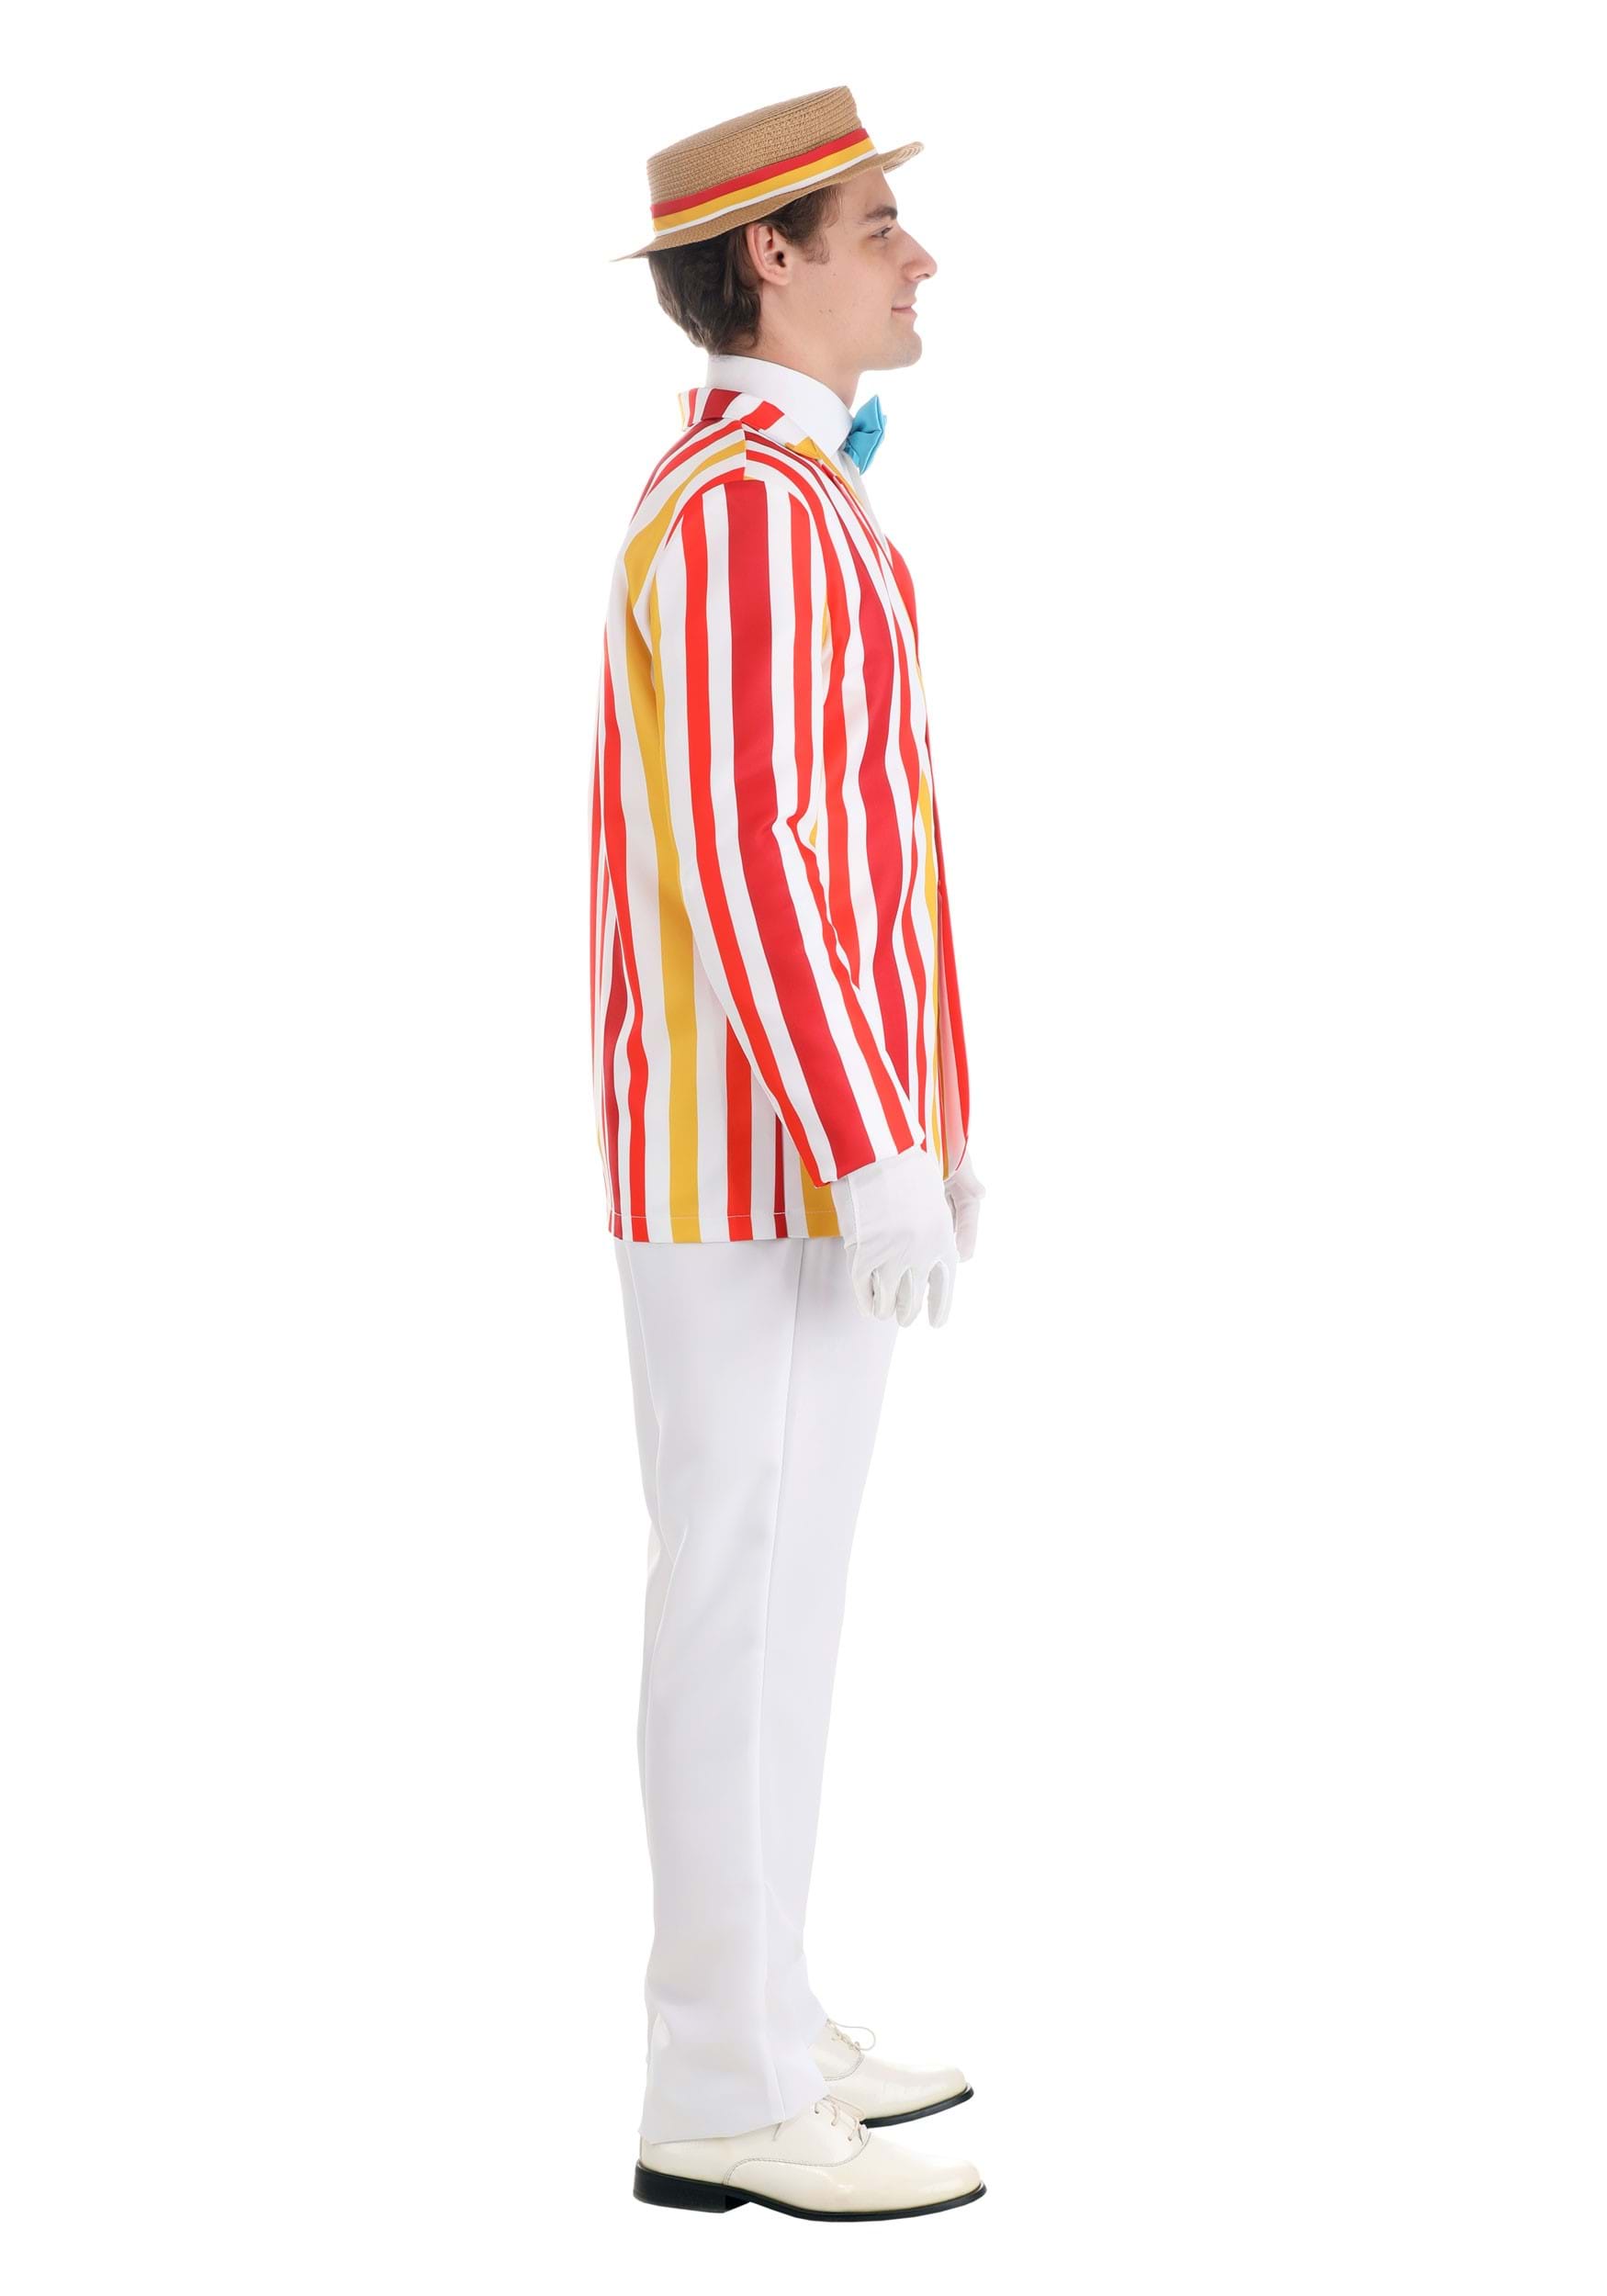 Men's Mary Poppins Bert Jacket Costume